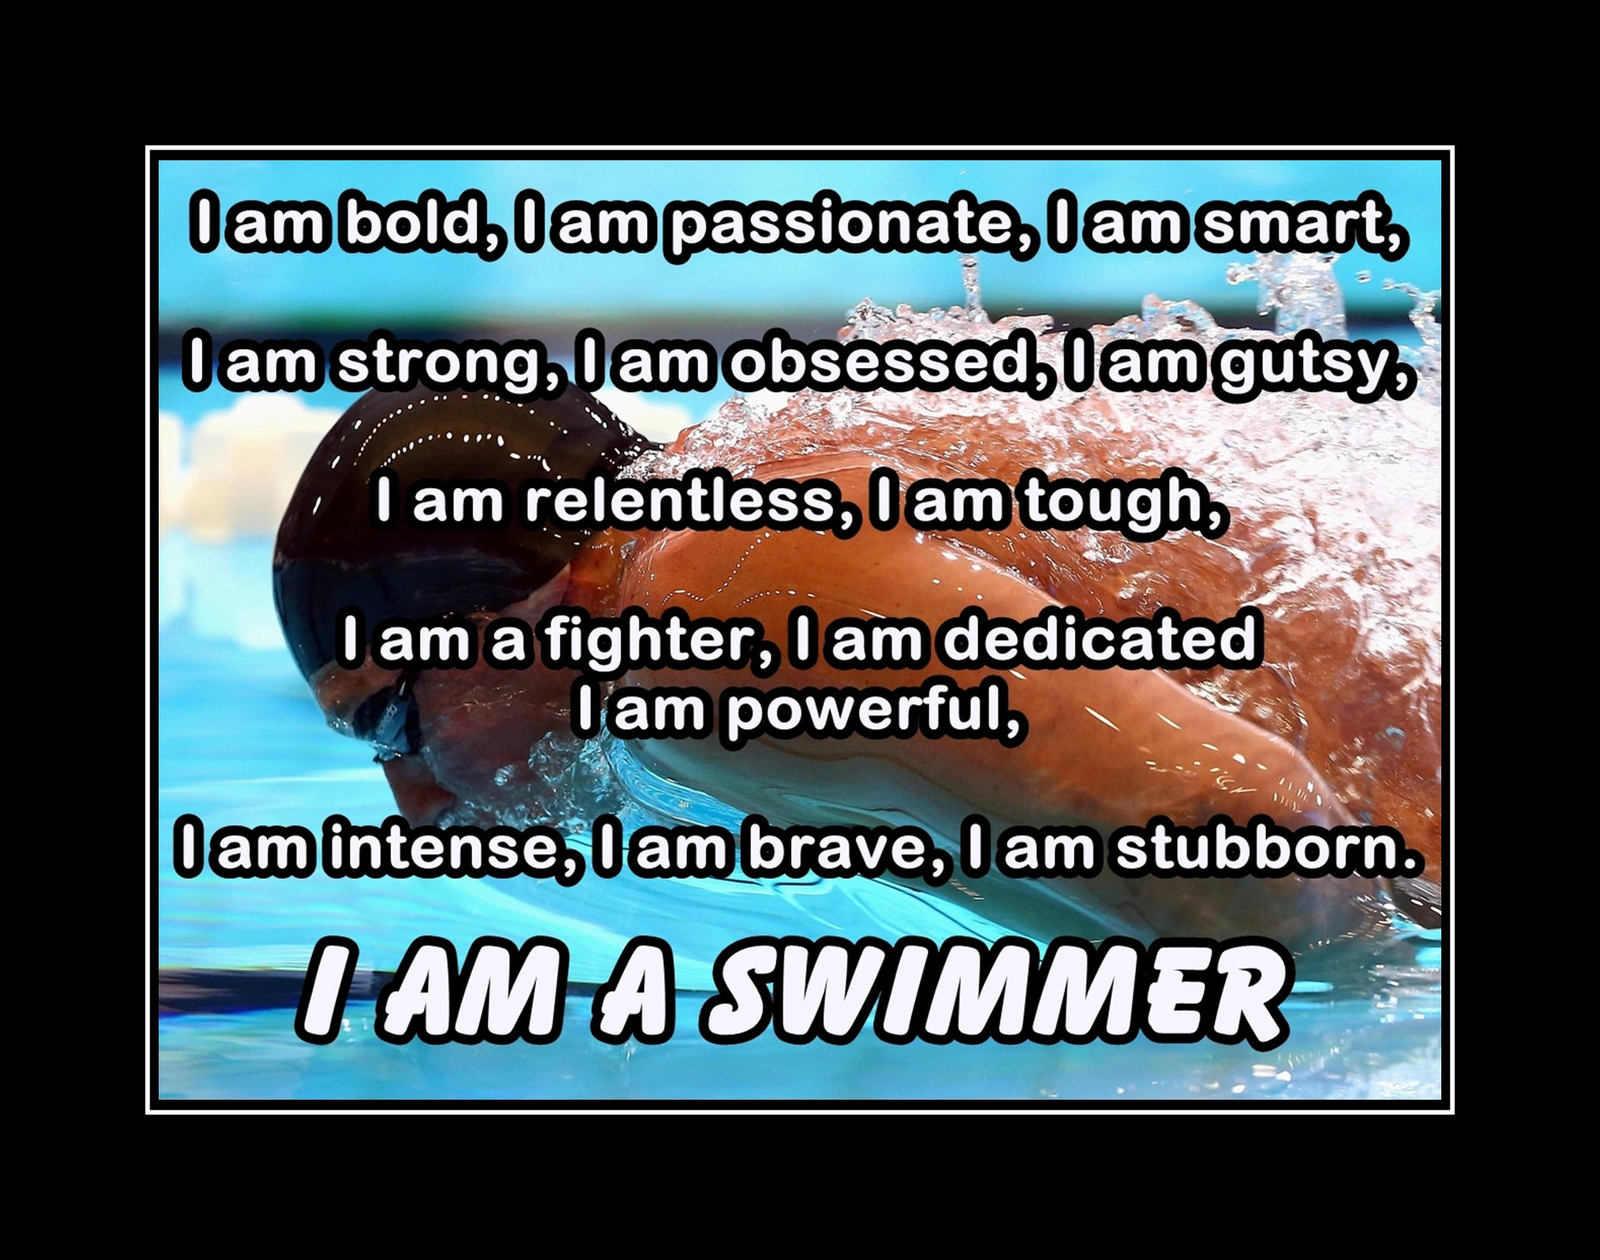 Inspirational Swimmer Confidence Poster Print Swim Motivation Wall Art Swimming - $22.99 - $39.99